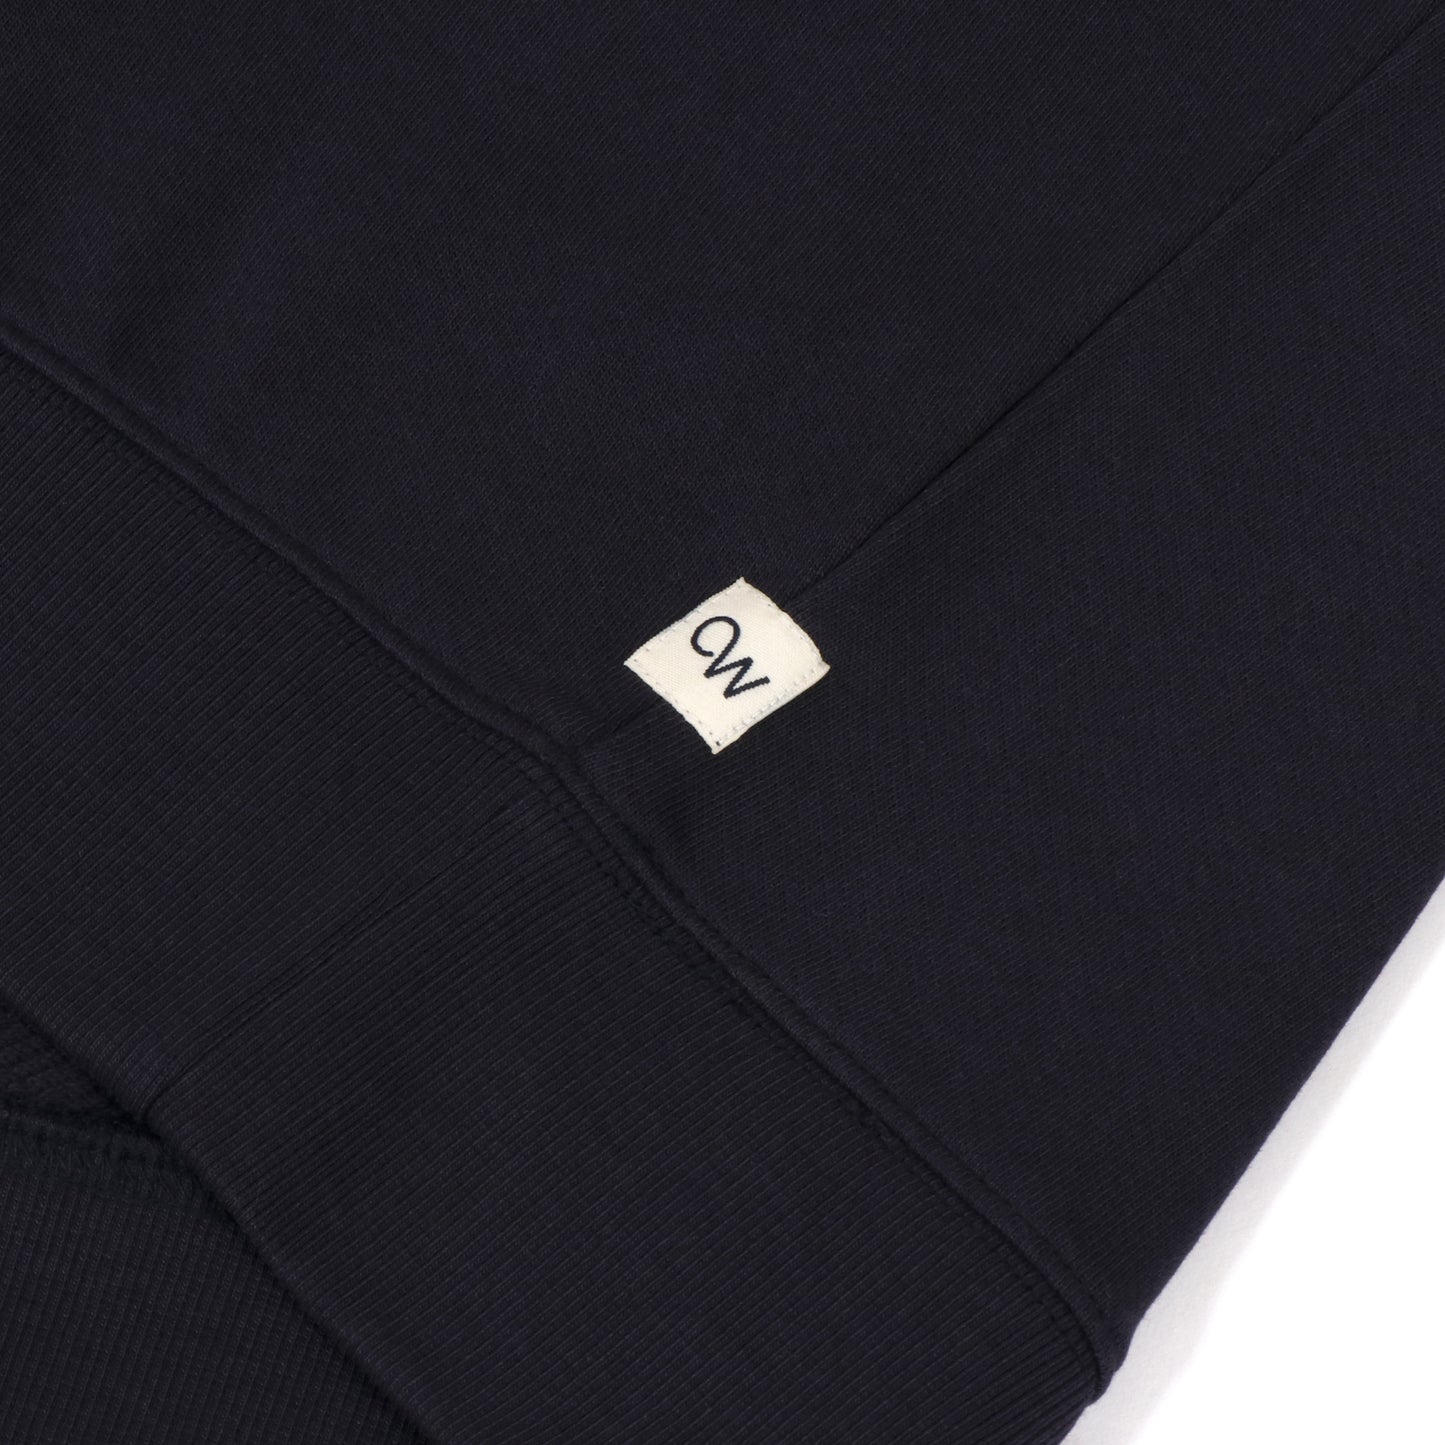 Navy Men's Sustainable Organic Cotton Sweatshirt flat lay detail